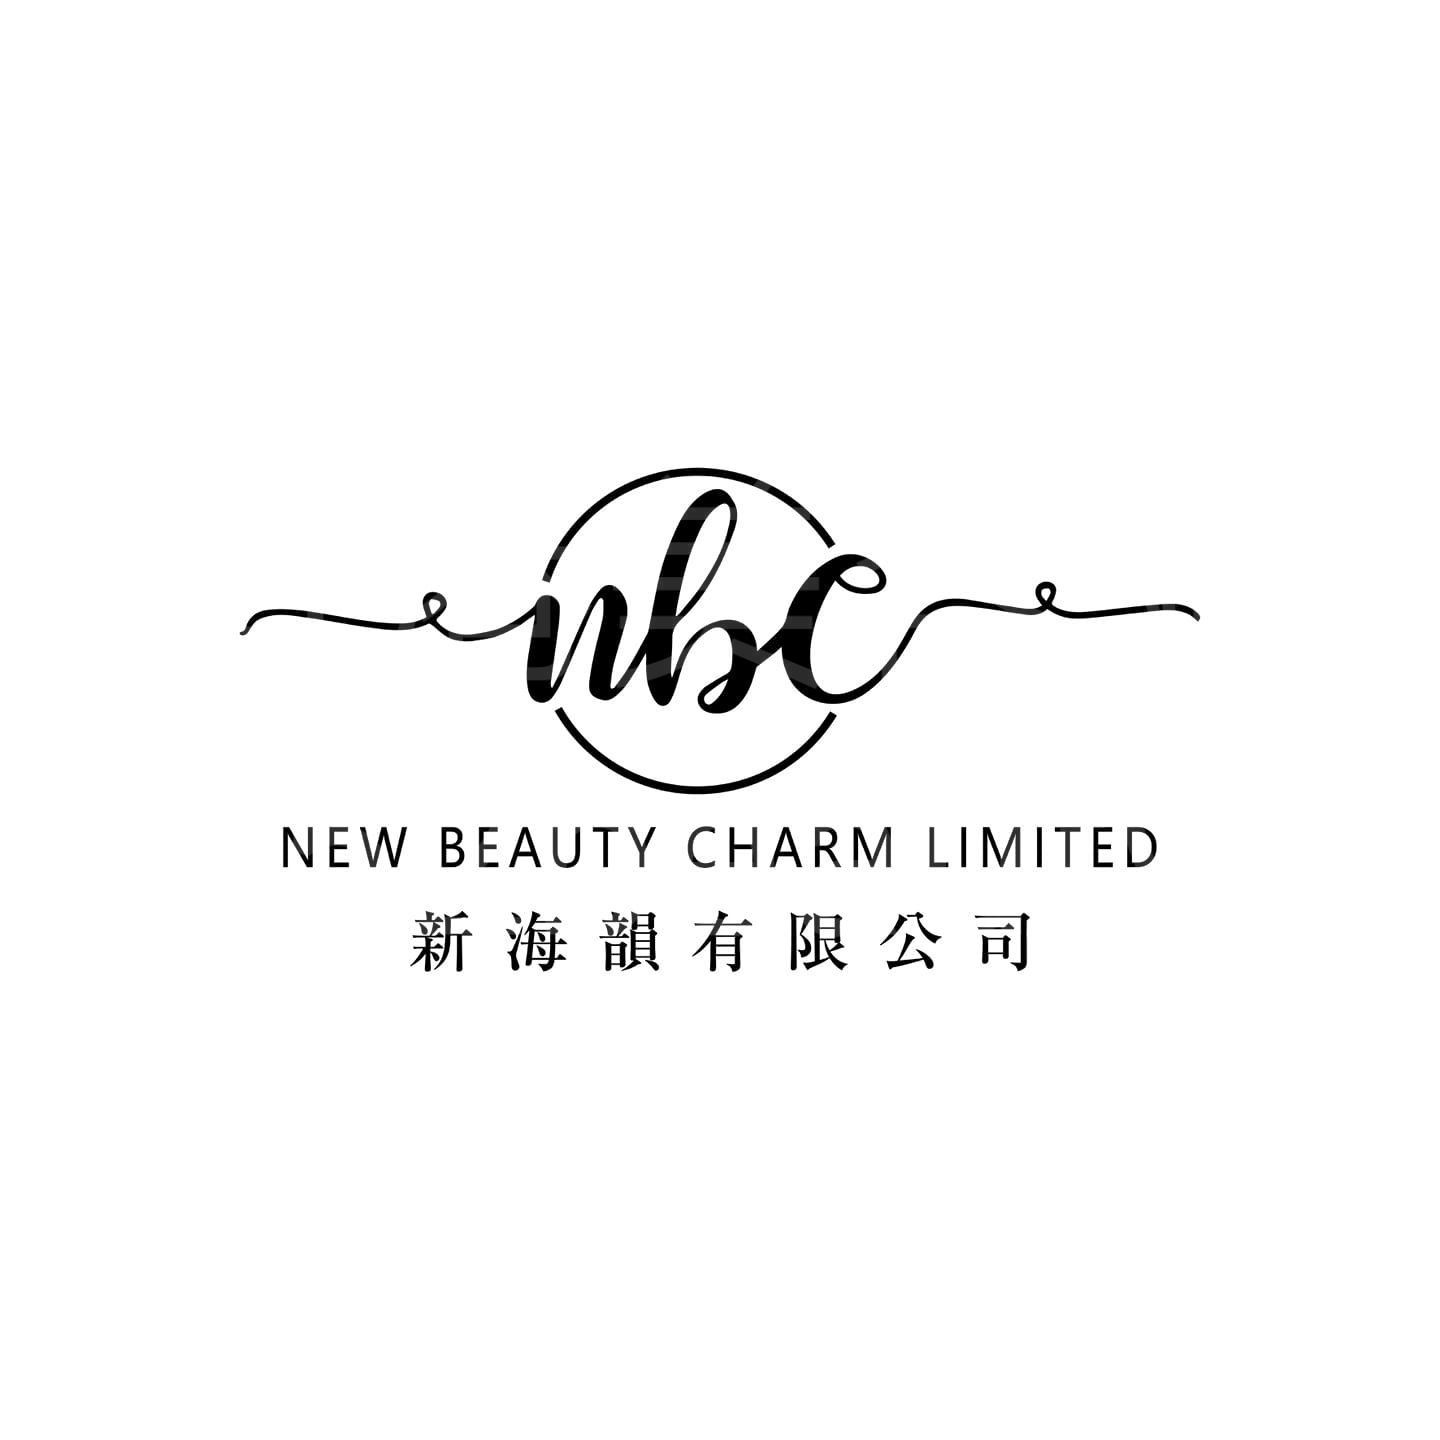 : New Beauty Charm 新海韻